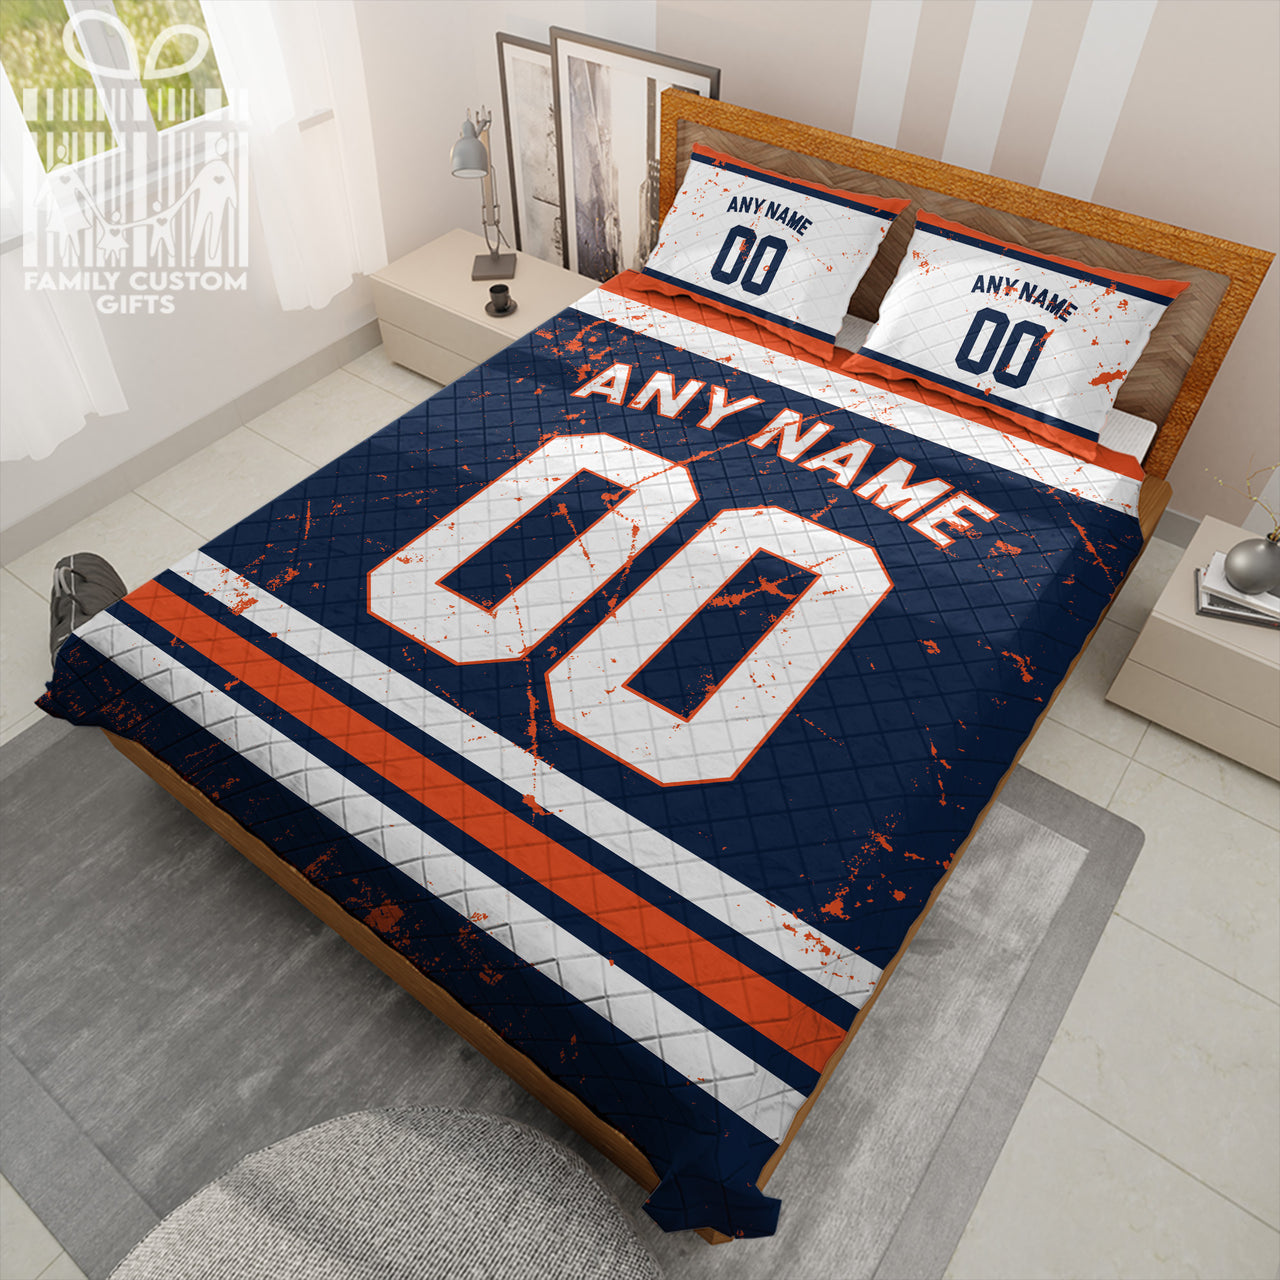 Custom Quilt Sets Edmonton Jersey Personalized Ice hockey Premium Quilt Bedding for Men Women